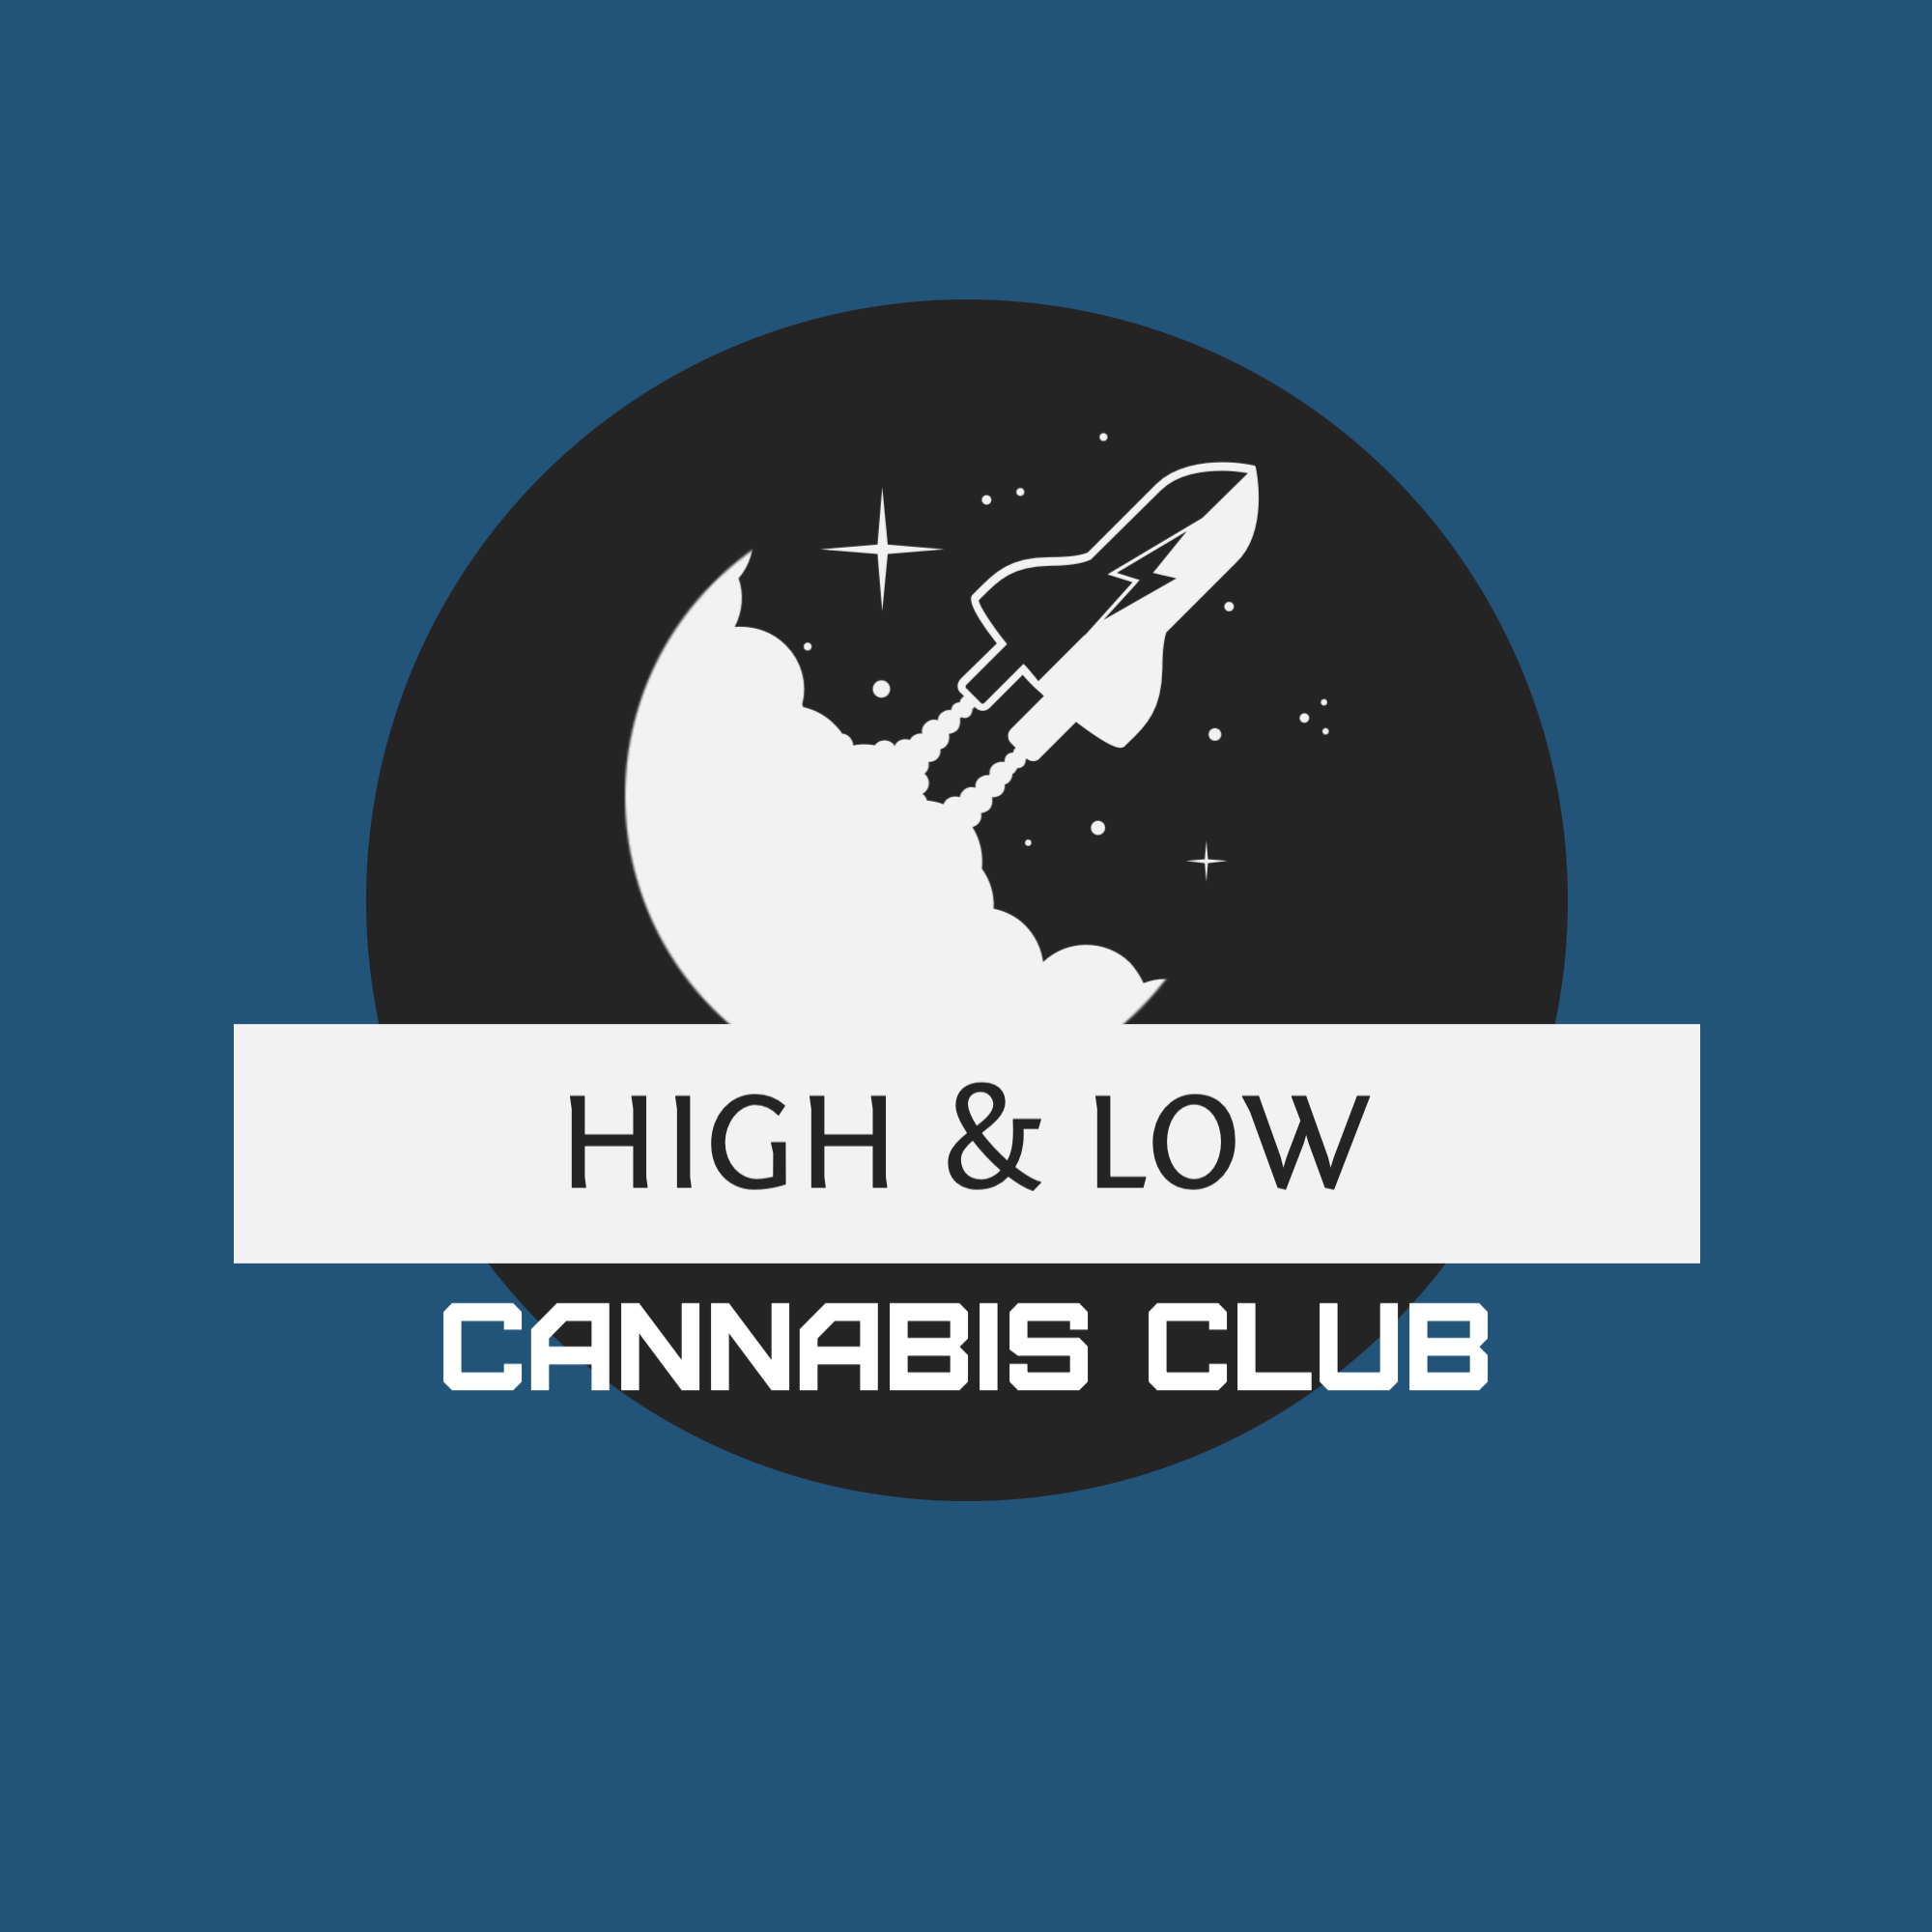 High & Low Cannabis Club